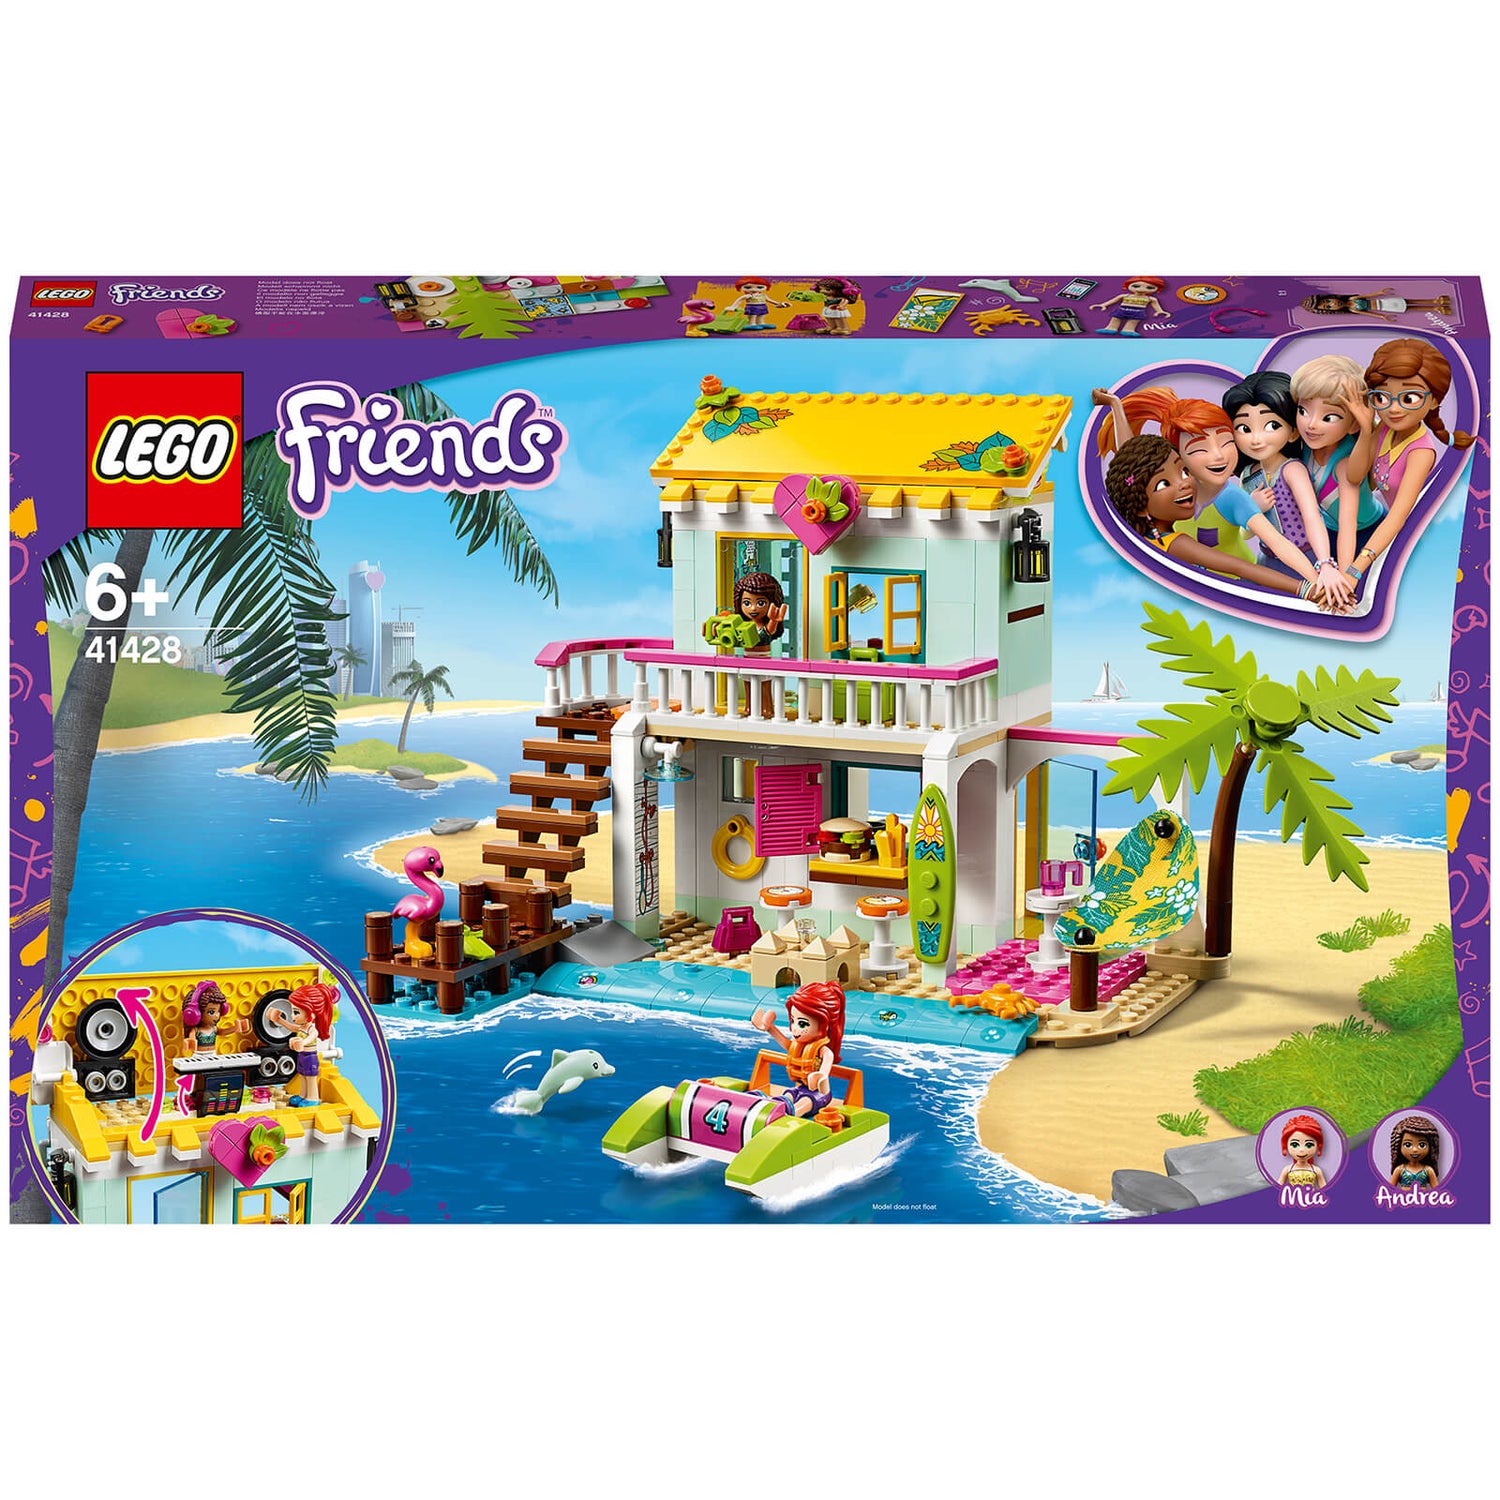 fisk os selv sagging LEGO Friends: Beach House Mini Dollhouse Play Set (41428) Toys - Zavvi US